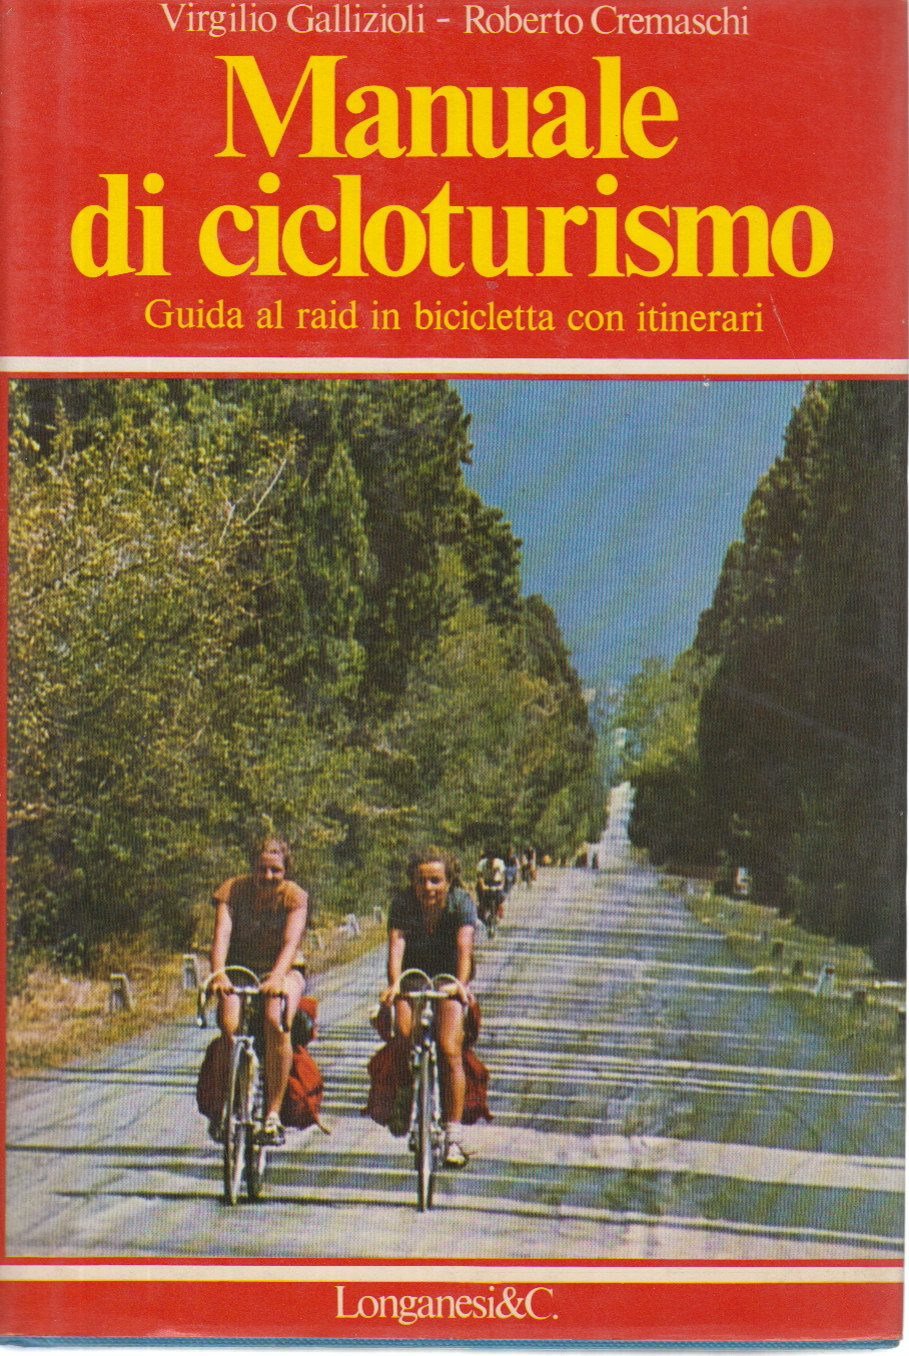 Manuale del cicloturismo, Virgilio Gallizioli Roberto Cremaschi